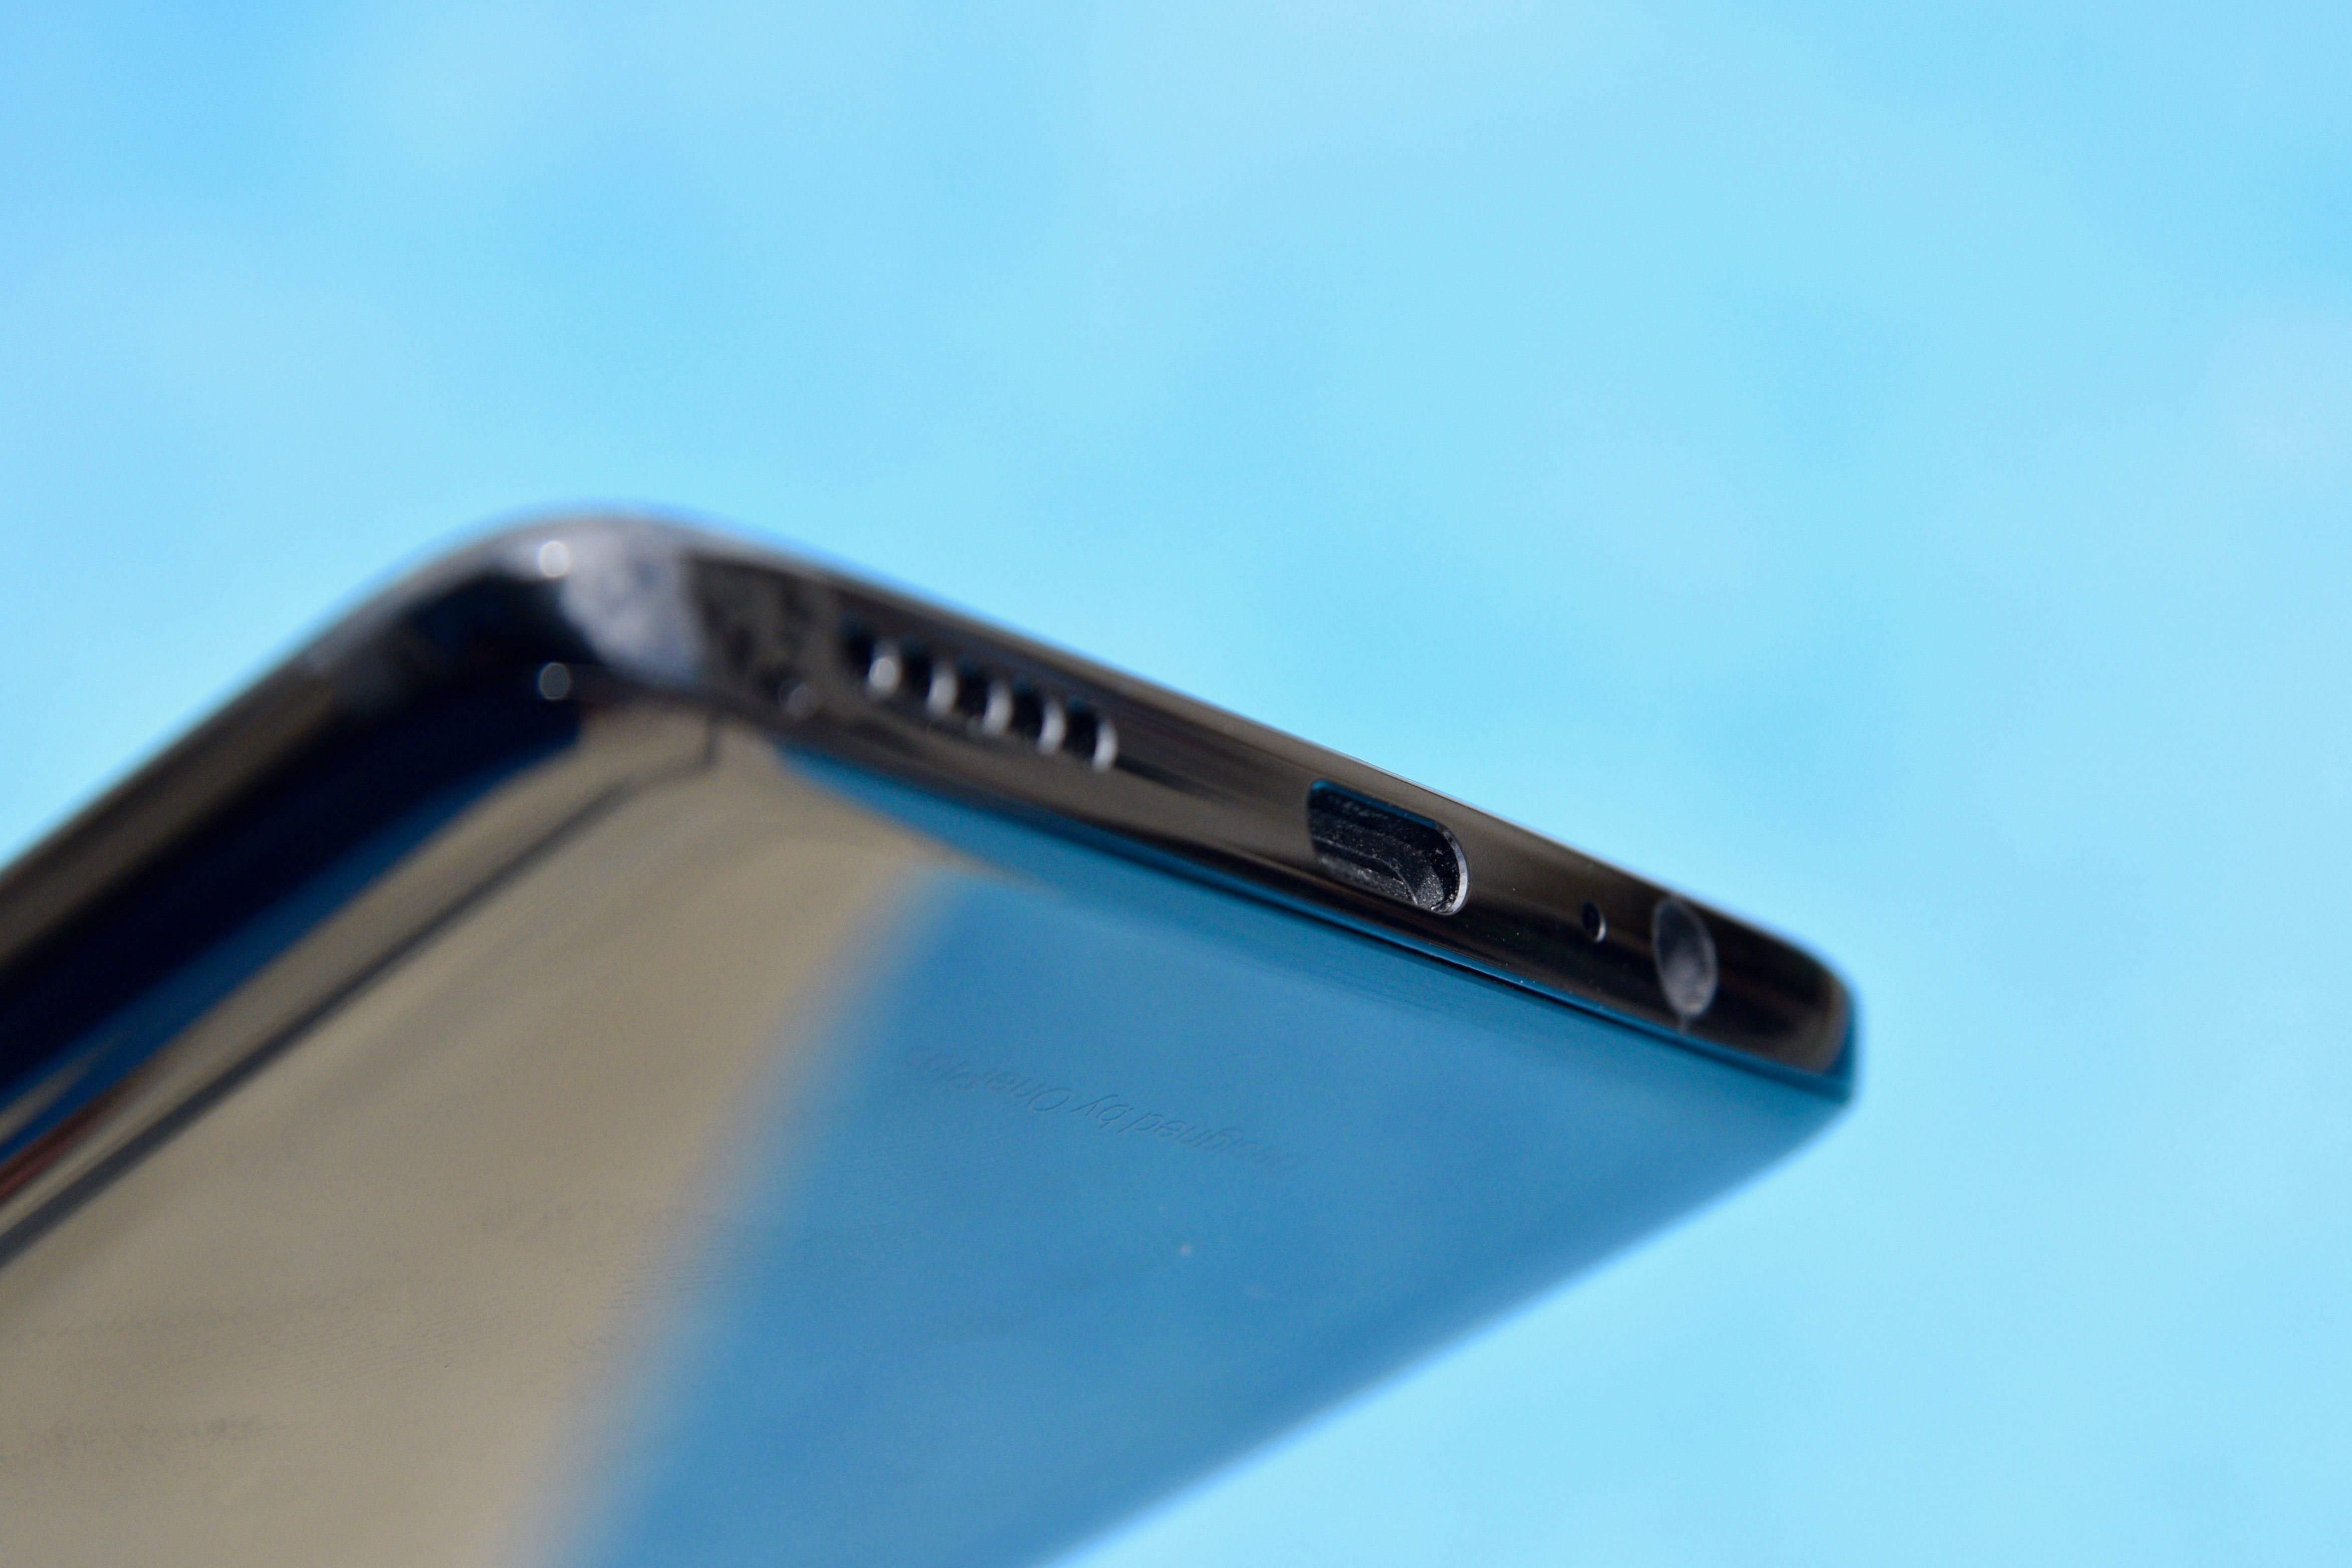 OnePlus 6 USB Type-C Port, 3.5mm Headphone Jack, Loudspeaker